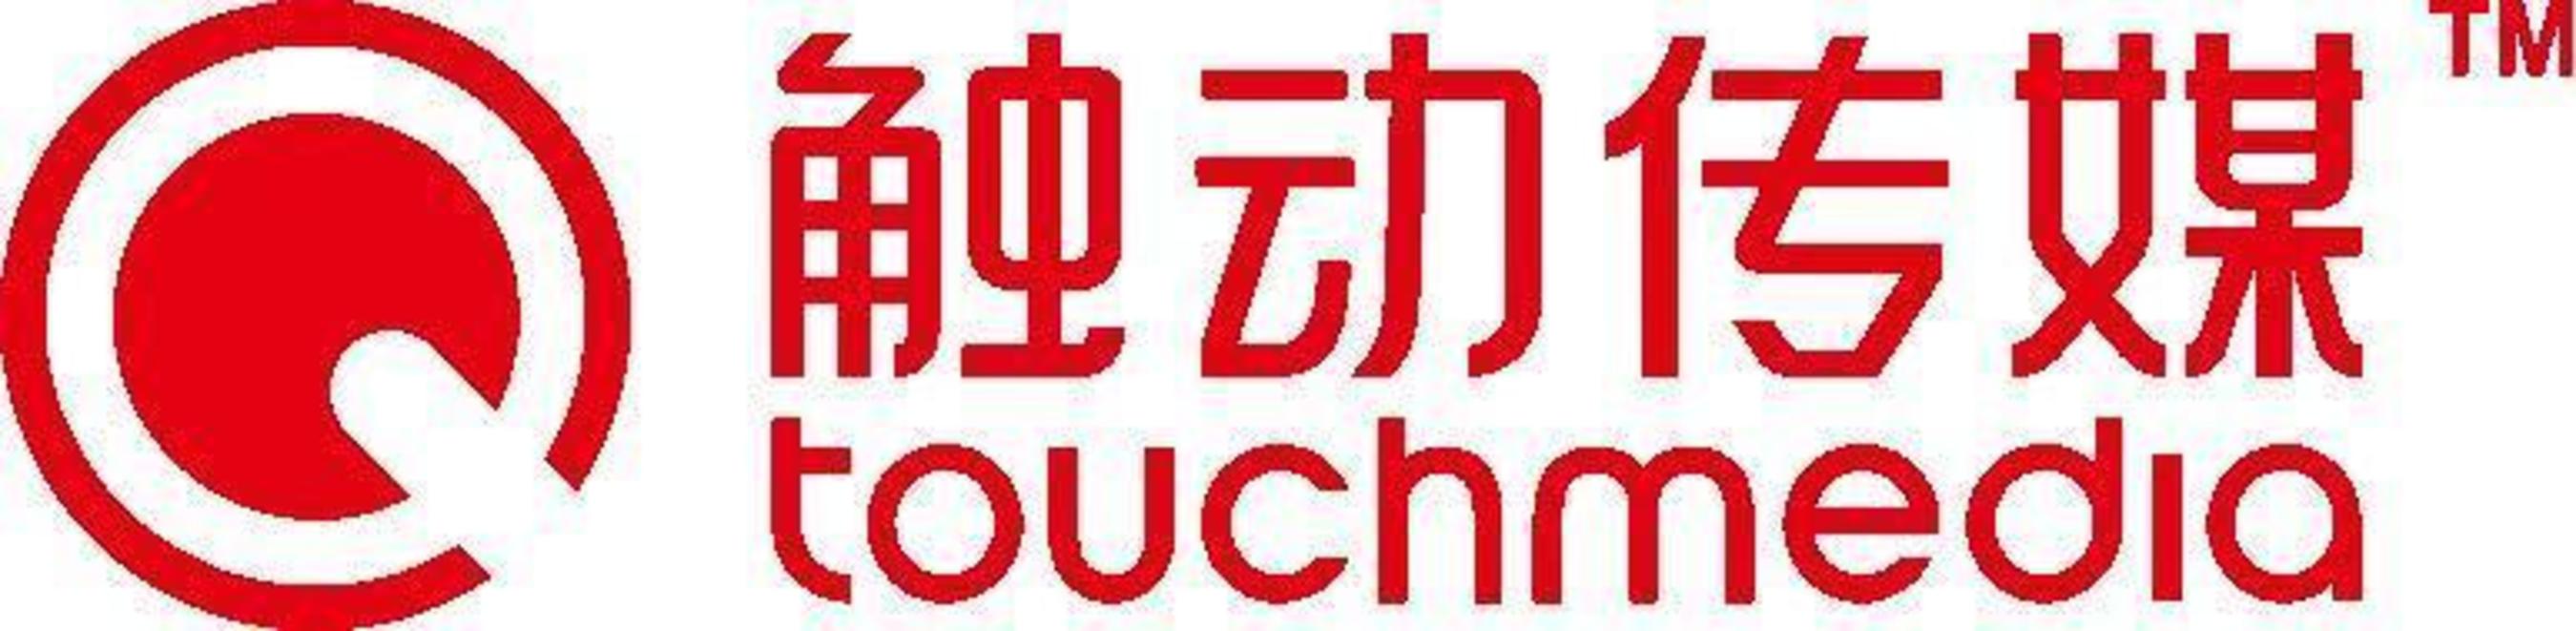 Touchmedia logo. (PRNewsFoto/XO Group Inc.)